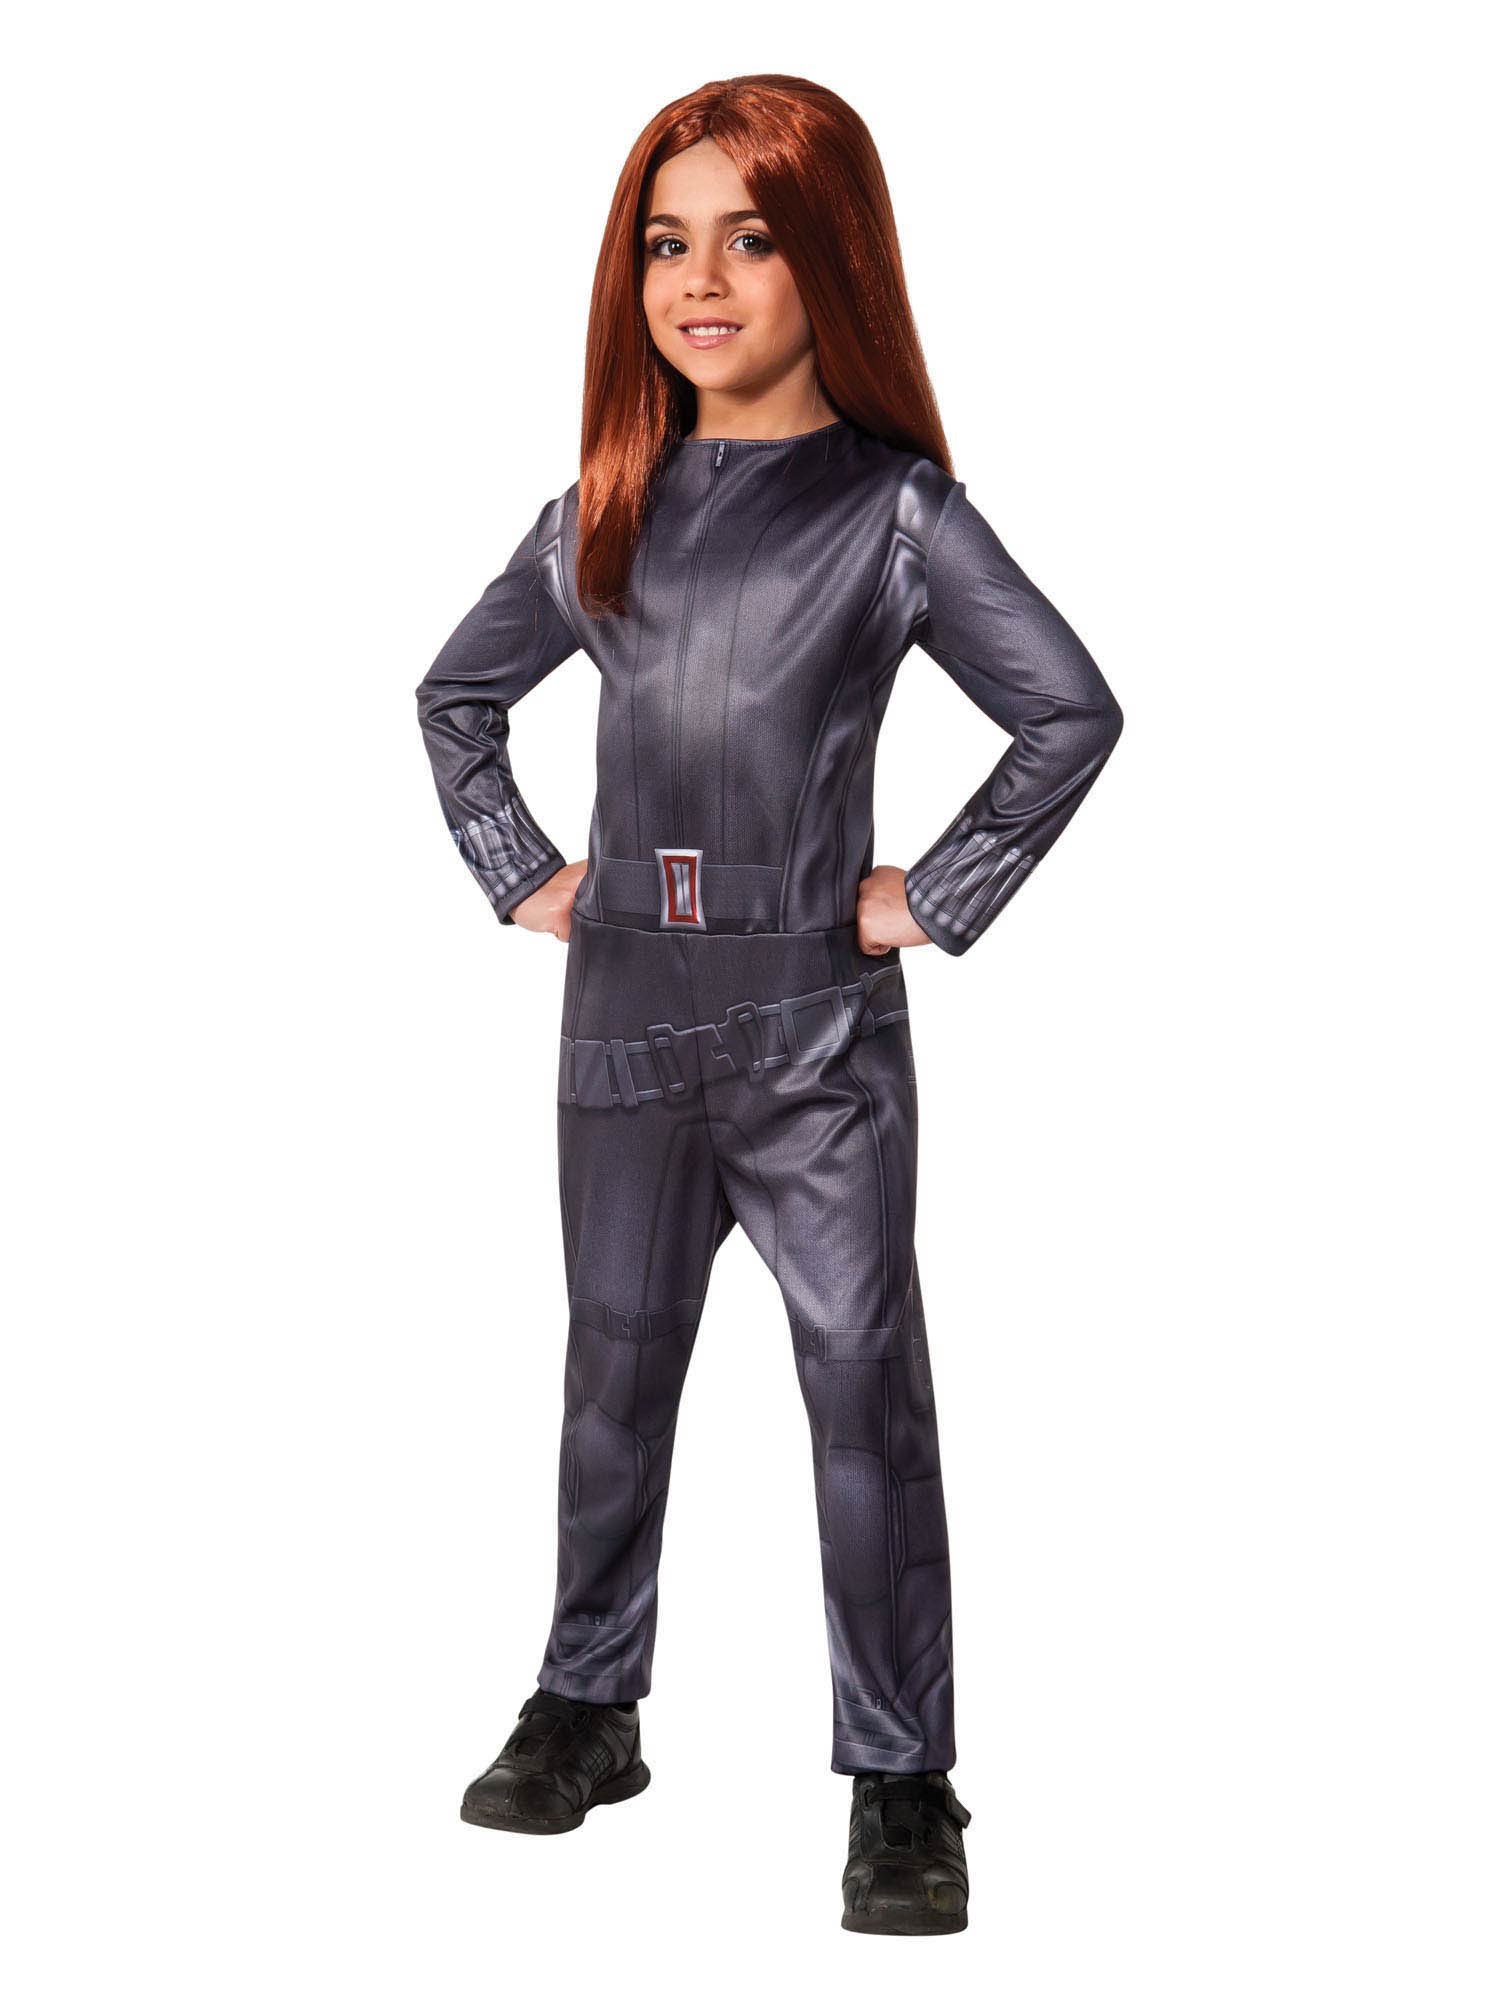 Captain America Winter Soldier - Black Widow Child Costume